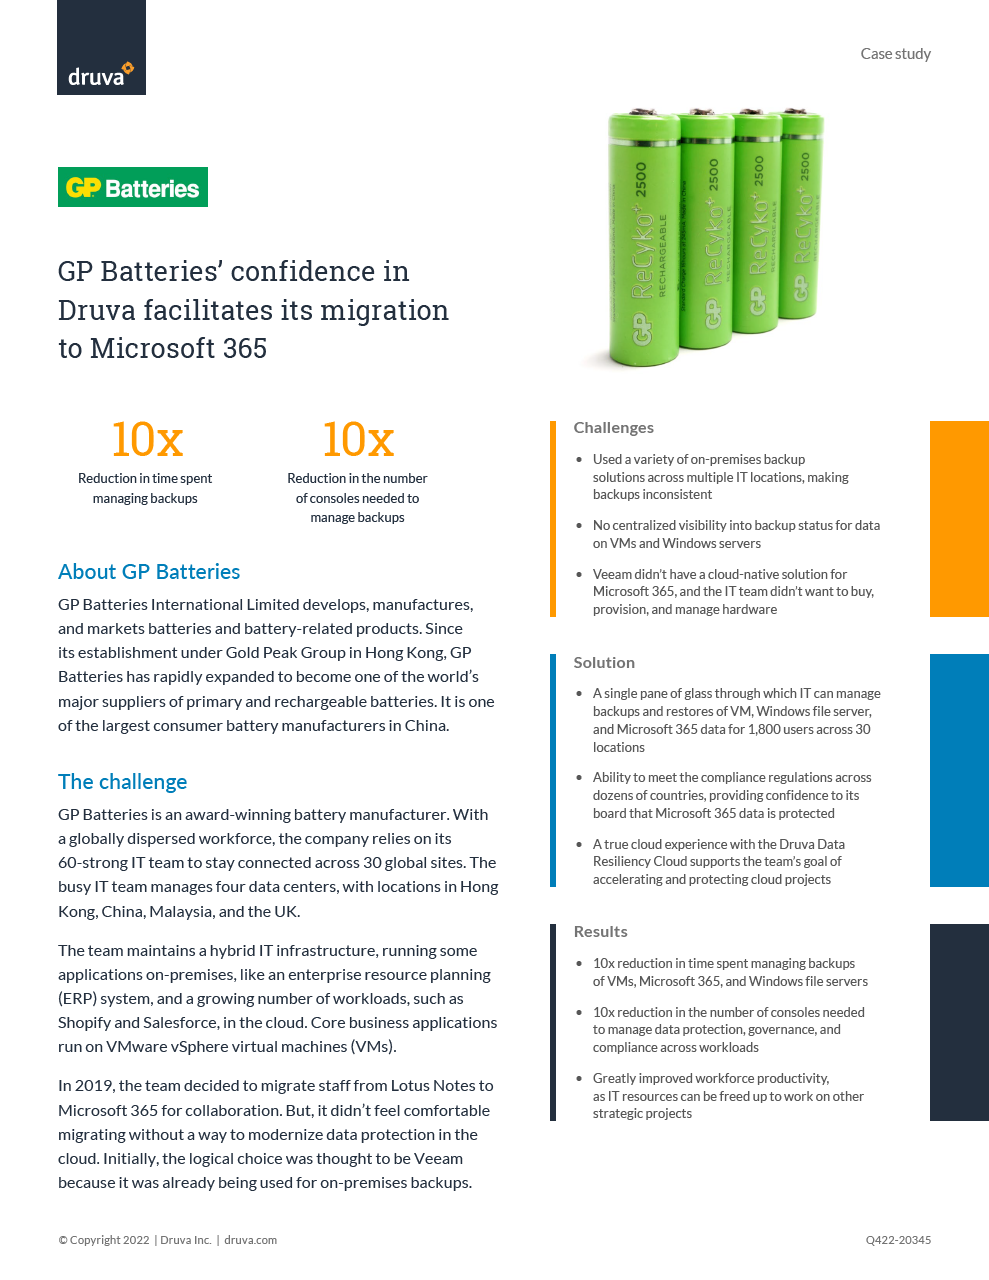 GP Batteries’ confidence in Druva facilitates its migration to Microsoft 365